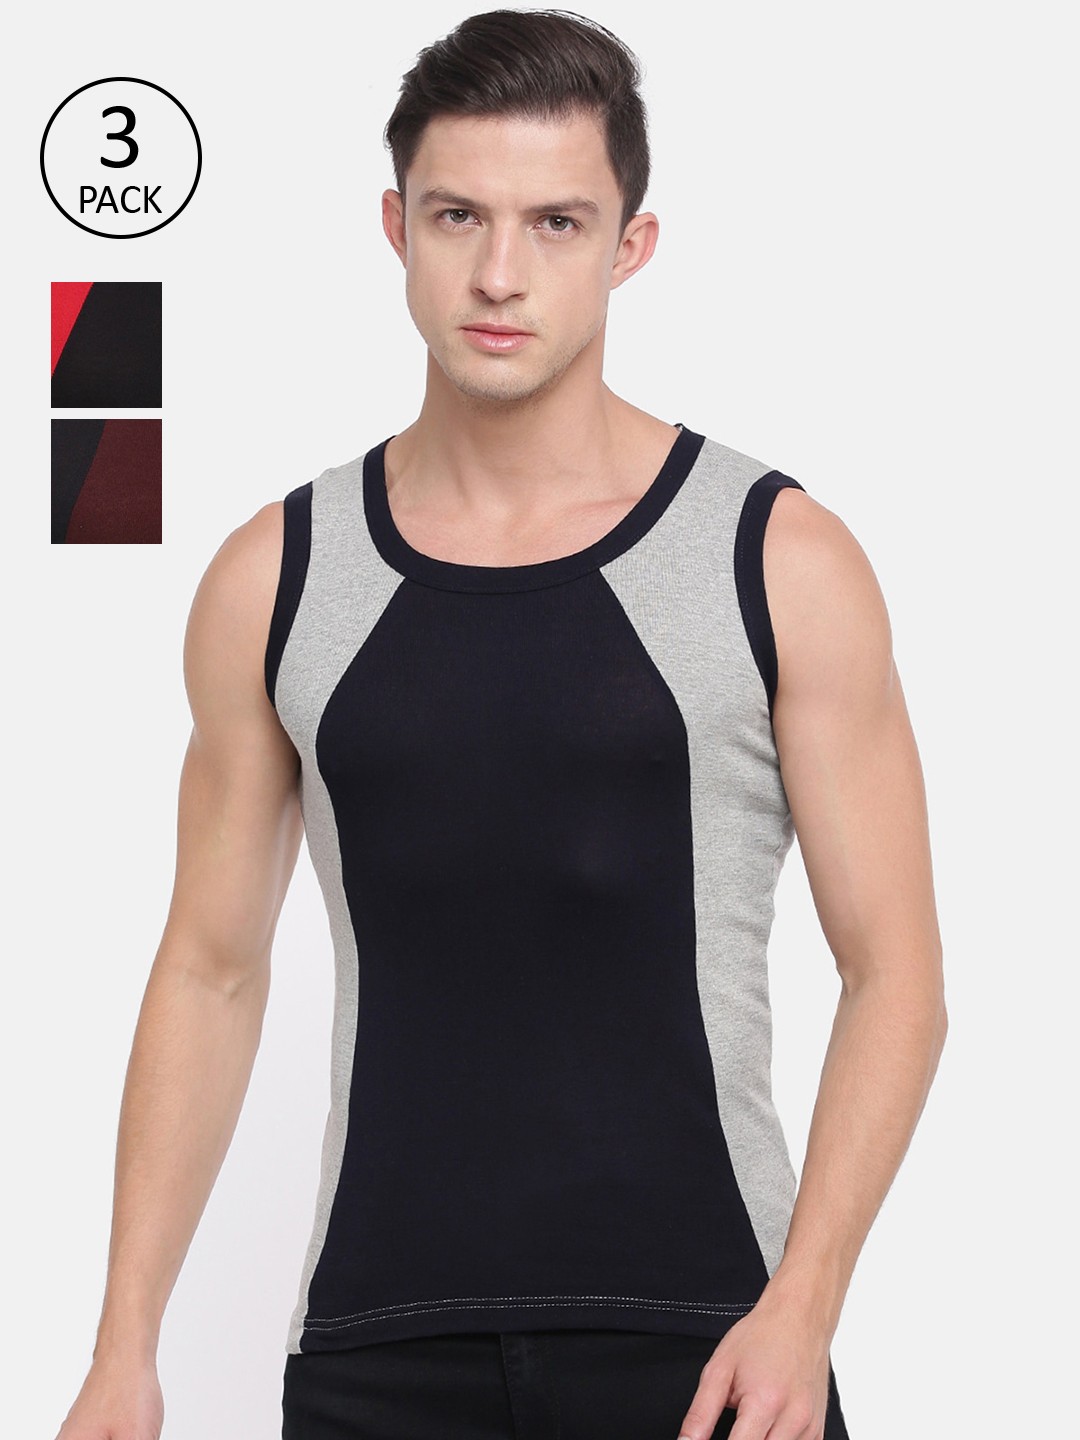 Clothing Innerwear Vests | Genx Men Pack Of 3 Assorted Pure Cotton Gym Innerwear Vests - TT28628